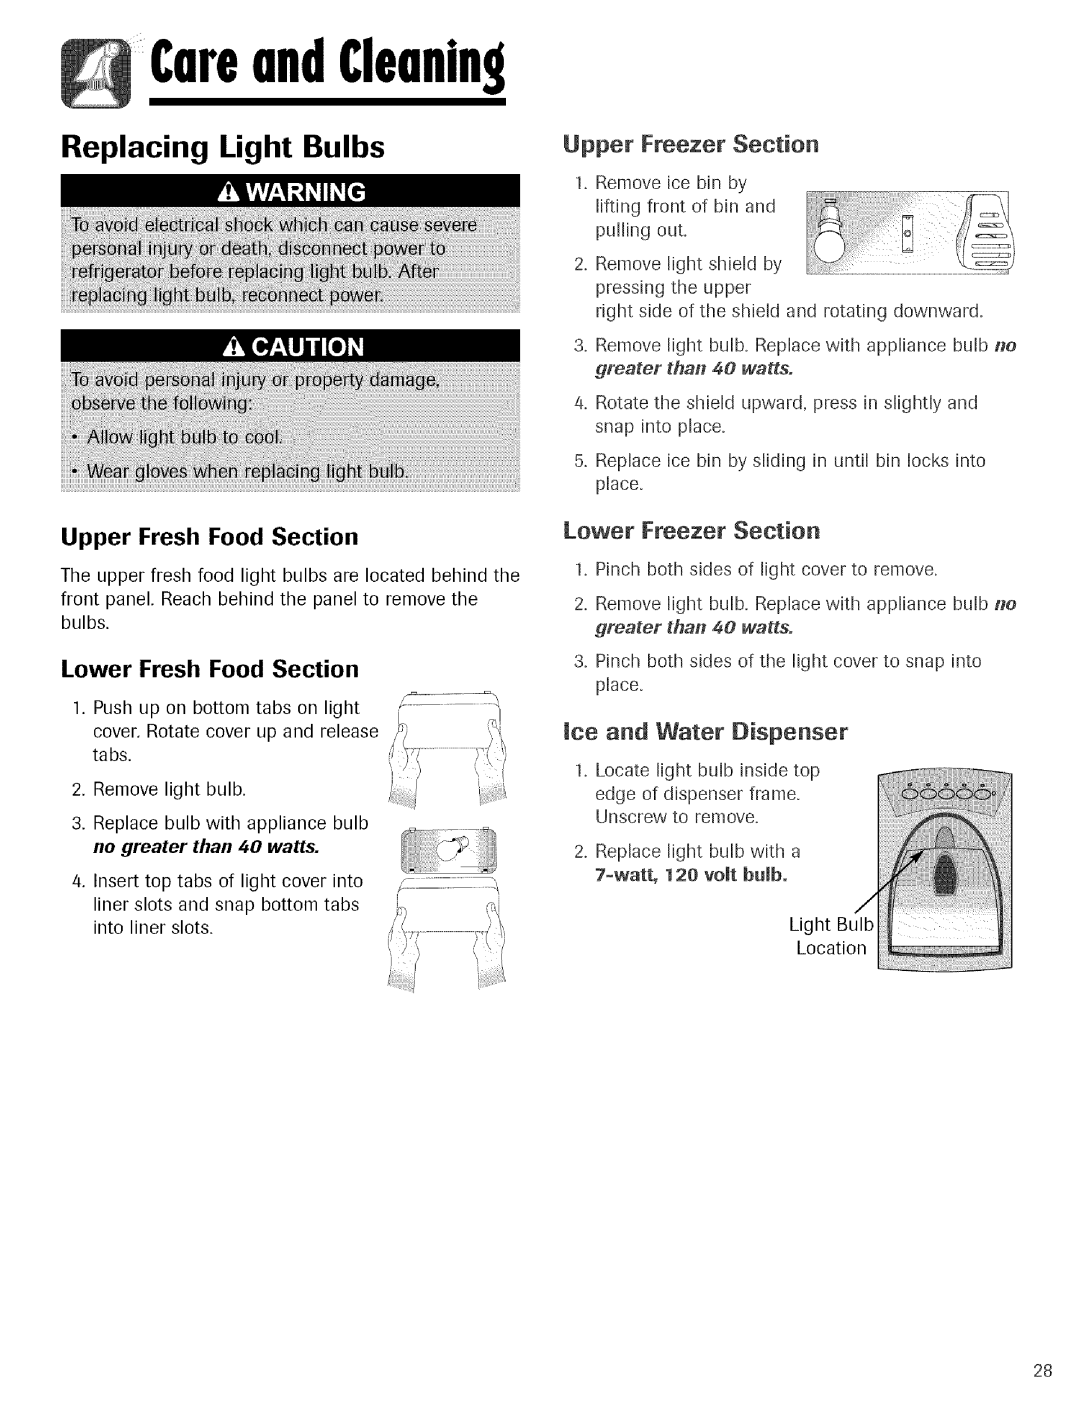 Maytag Refrigerator Replacing Light Bulbs, Upper Fresh Food Section, Lower Fresh Food Section, Upper Freezer Section 